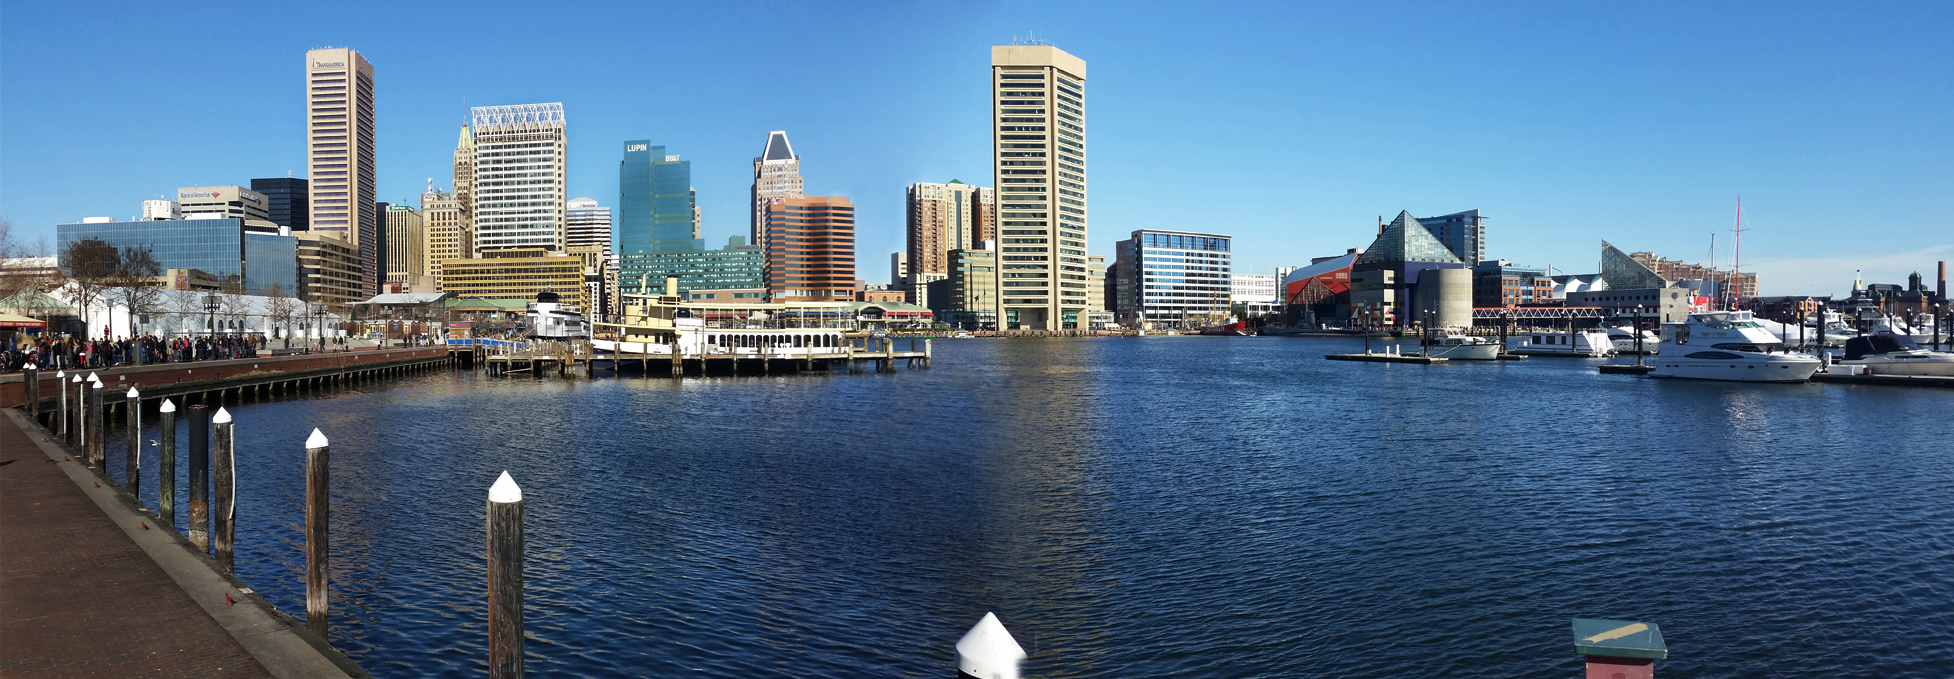 Baltimore harbor.jpg